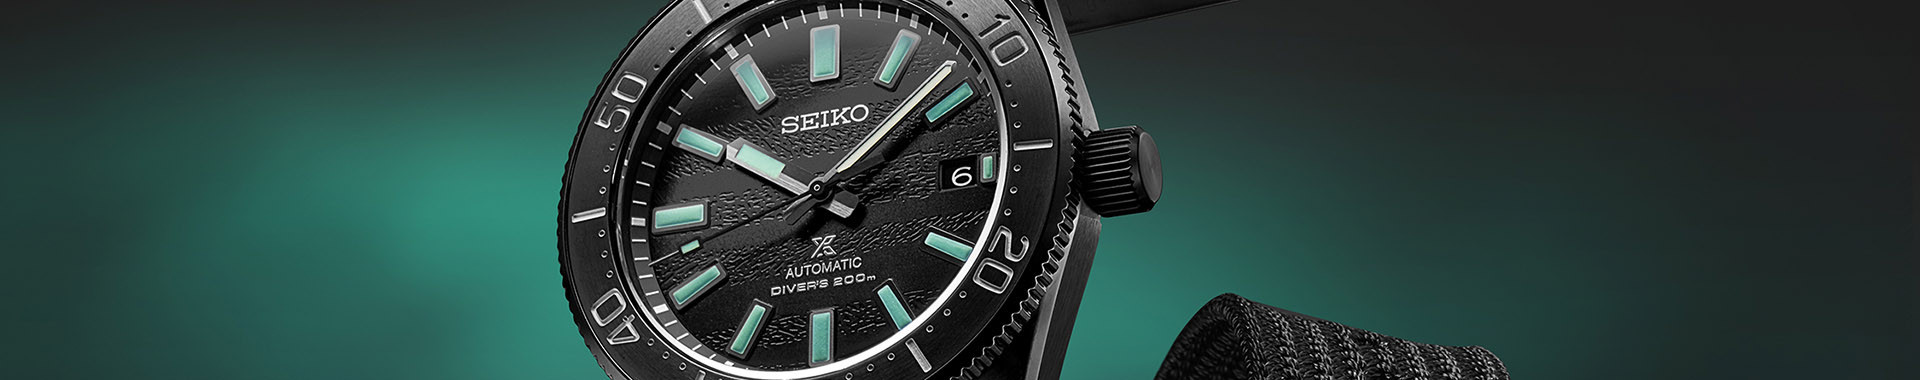 Seiko Limited Edition Uhren online kaufen | Seiko Boutique